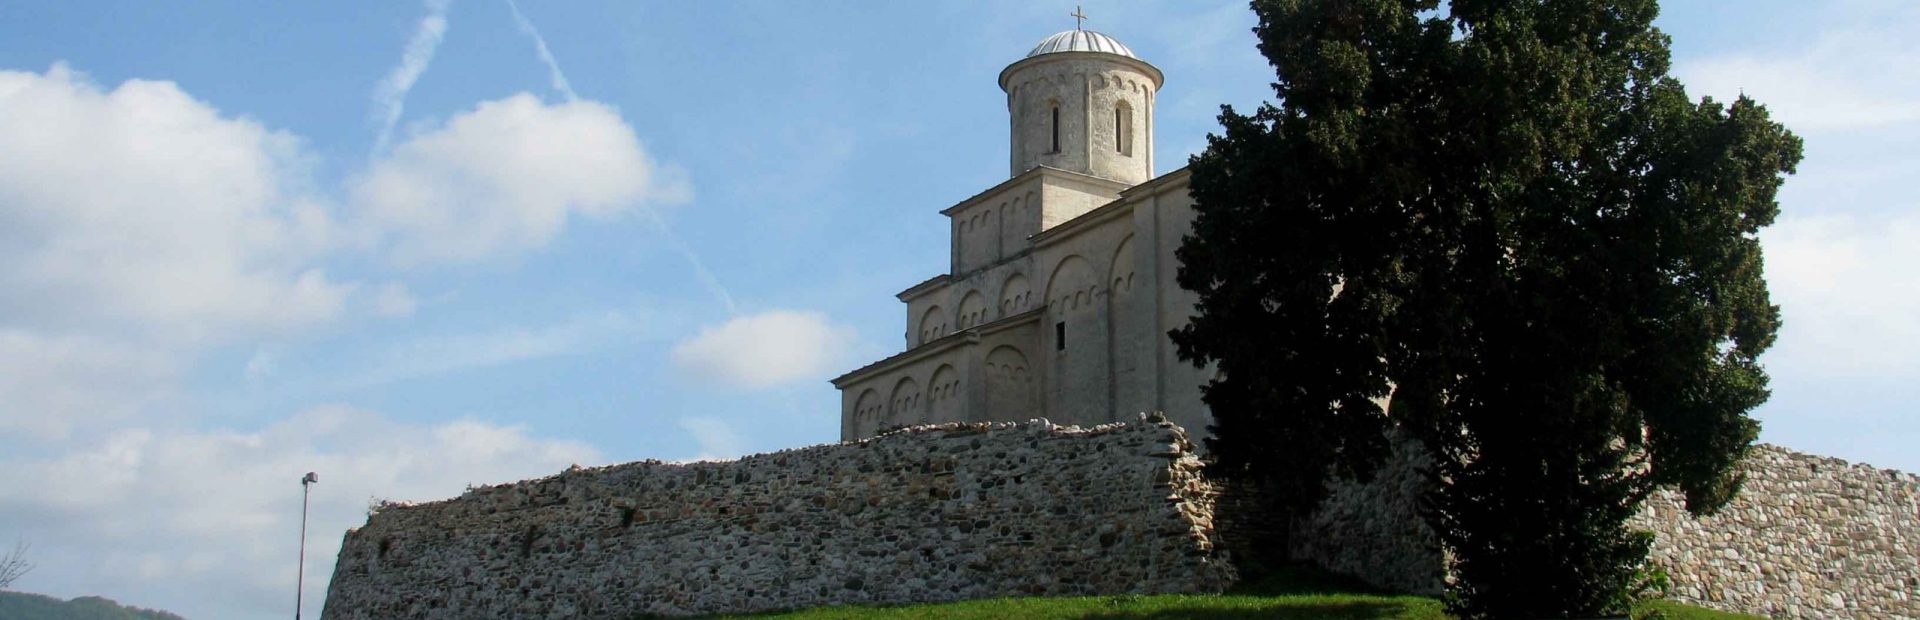 Serbia-travel-Arilje-St-Achillius-church-Glimpses-of-the-World